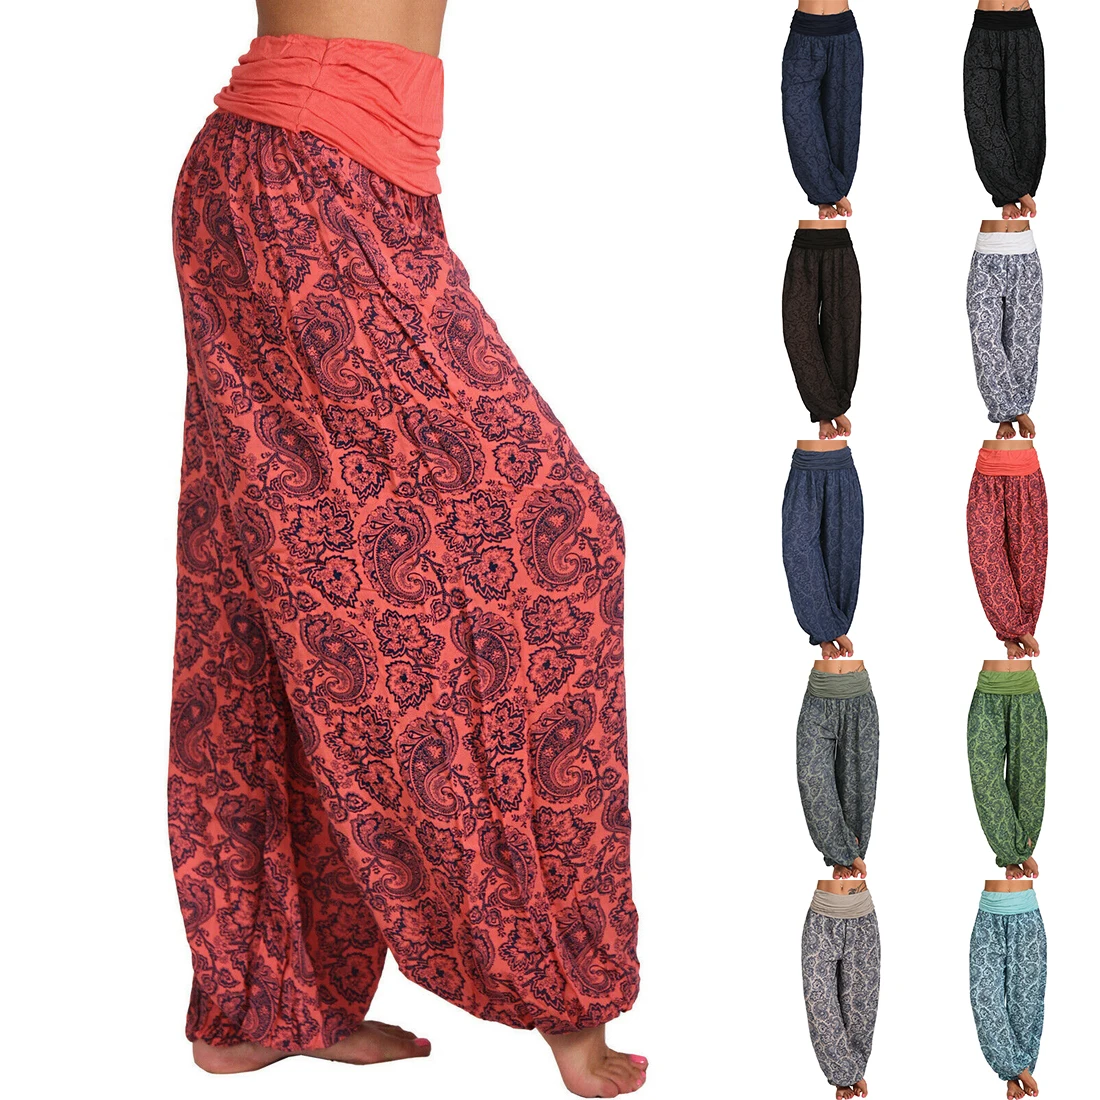 Women Bohemian Floral Print Long Pants 2021 Mid Waist Vintage Harem Pants Elastic Waist Boho Beach Trousers